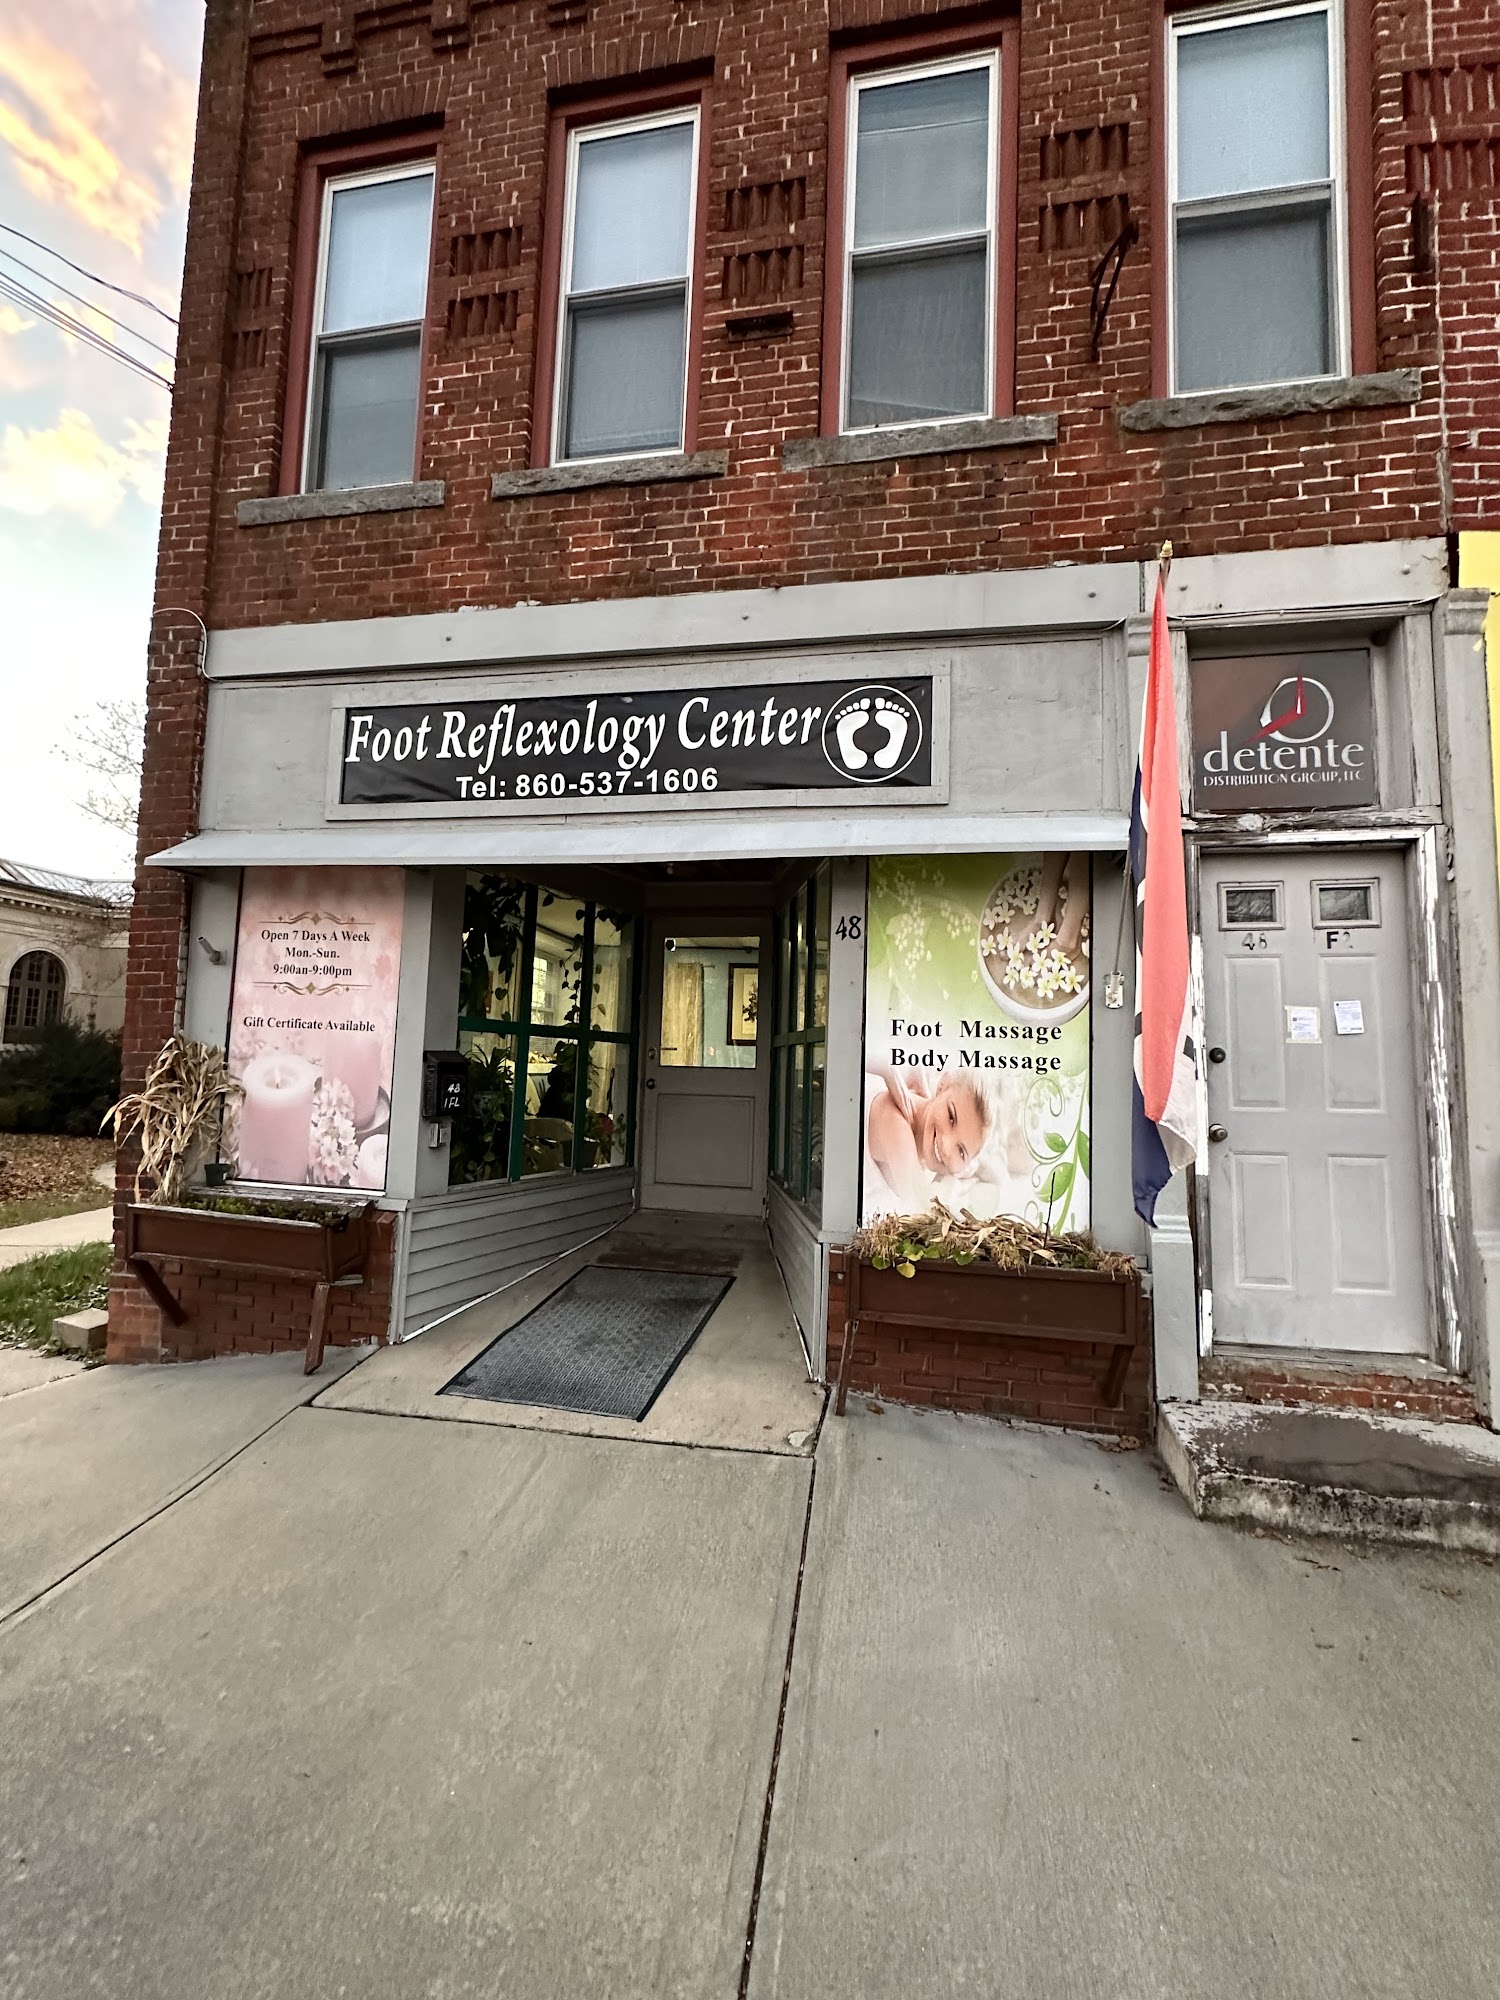 Body and Reflexology Center 48 Main St, Colchester Connecticut 06415